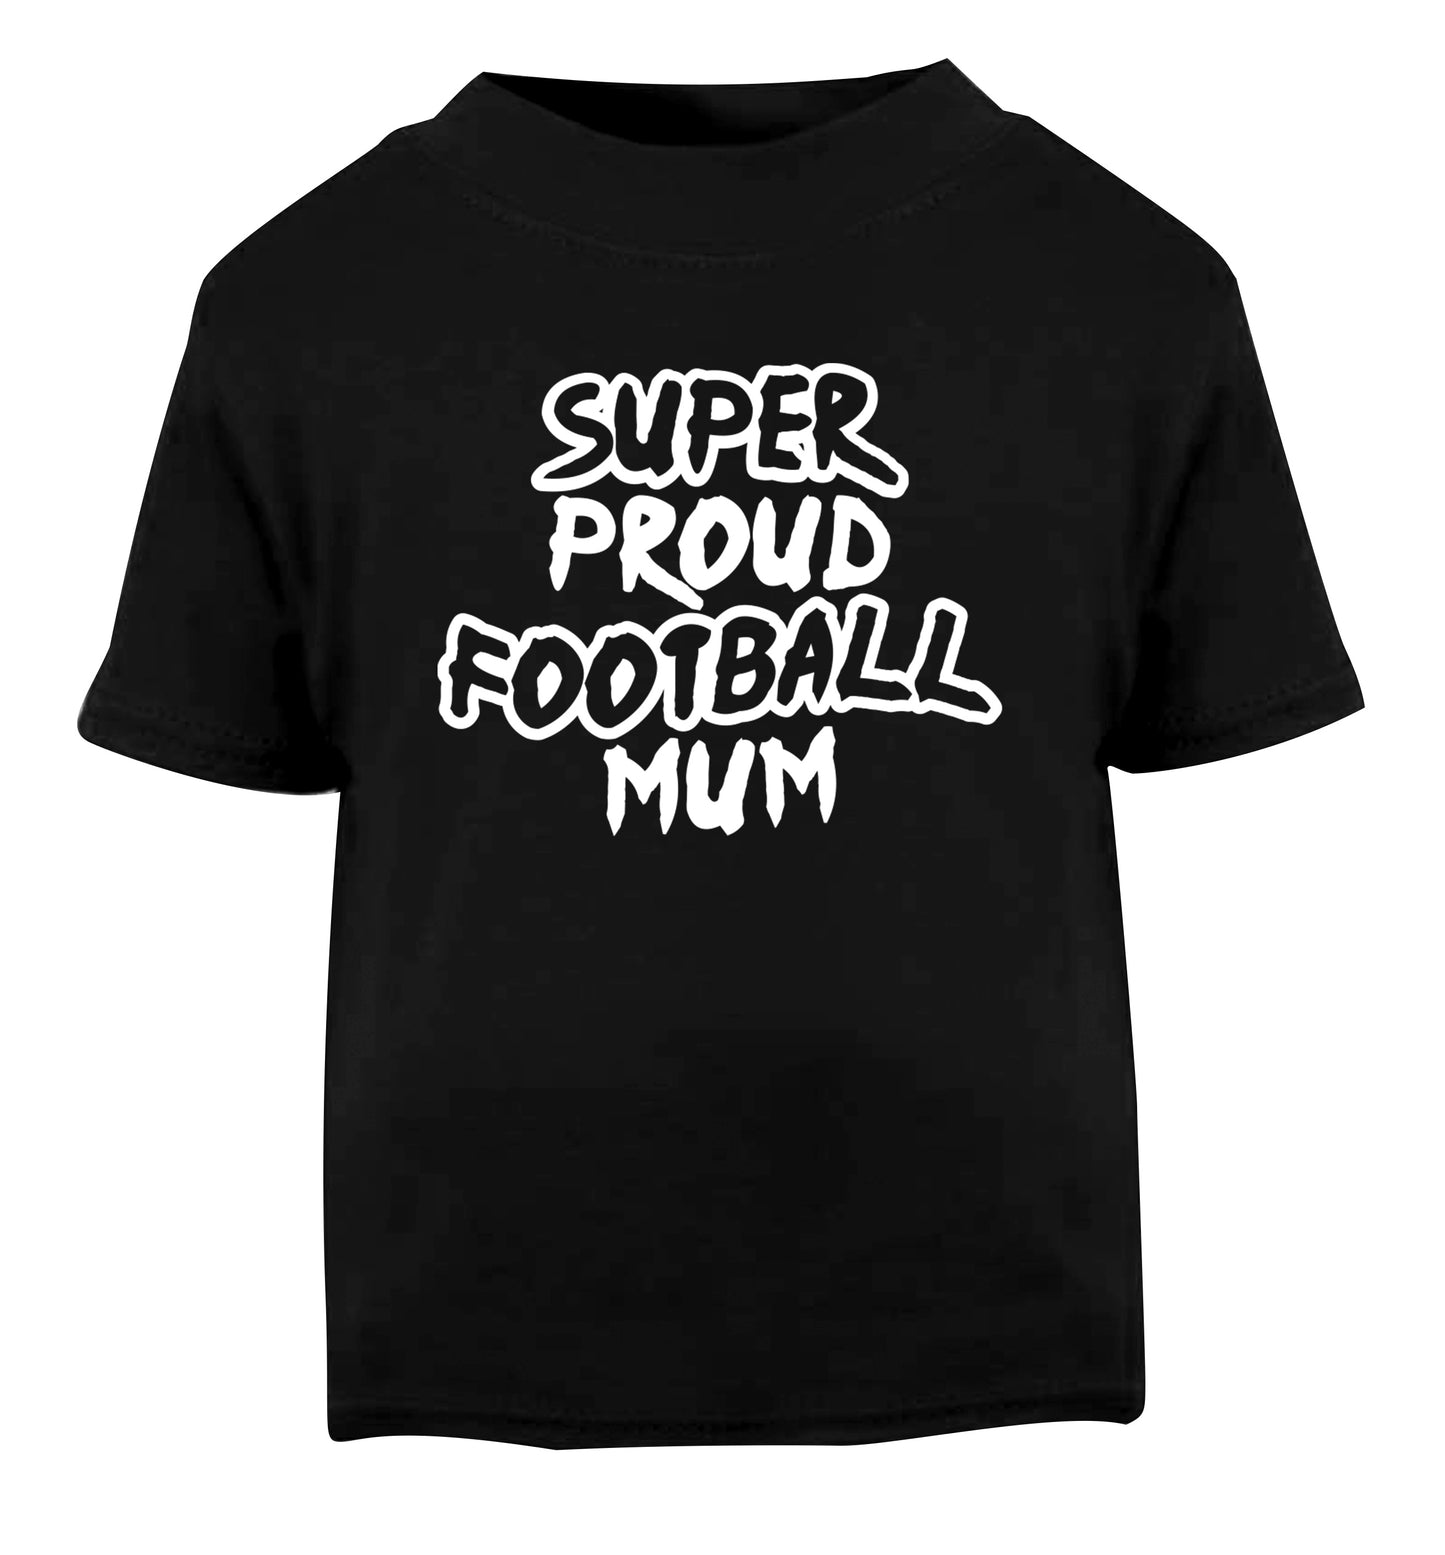 Super proud football mum Black Baby Toddler Tshirt 2 years